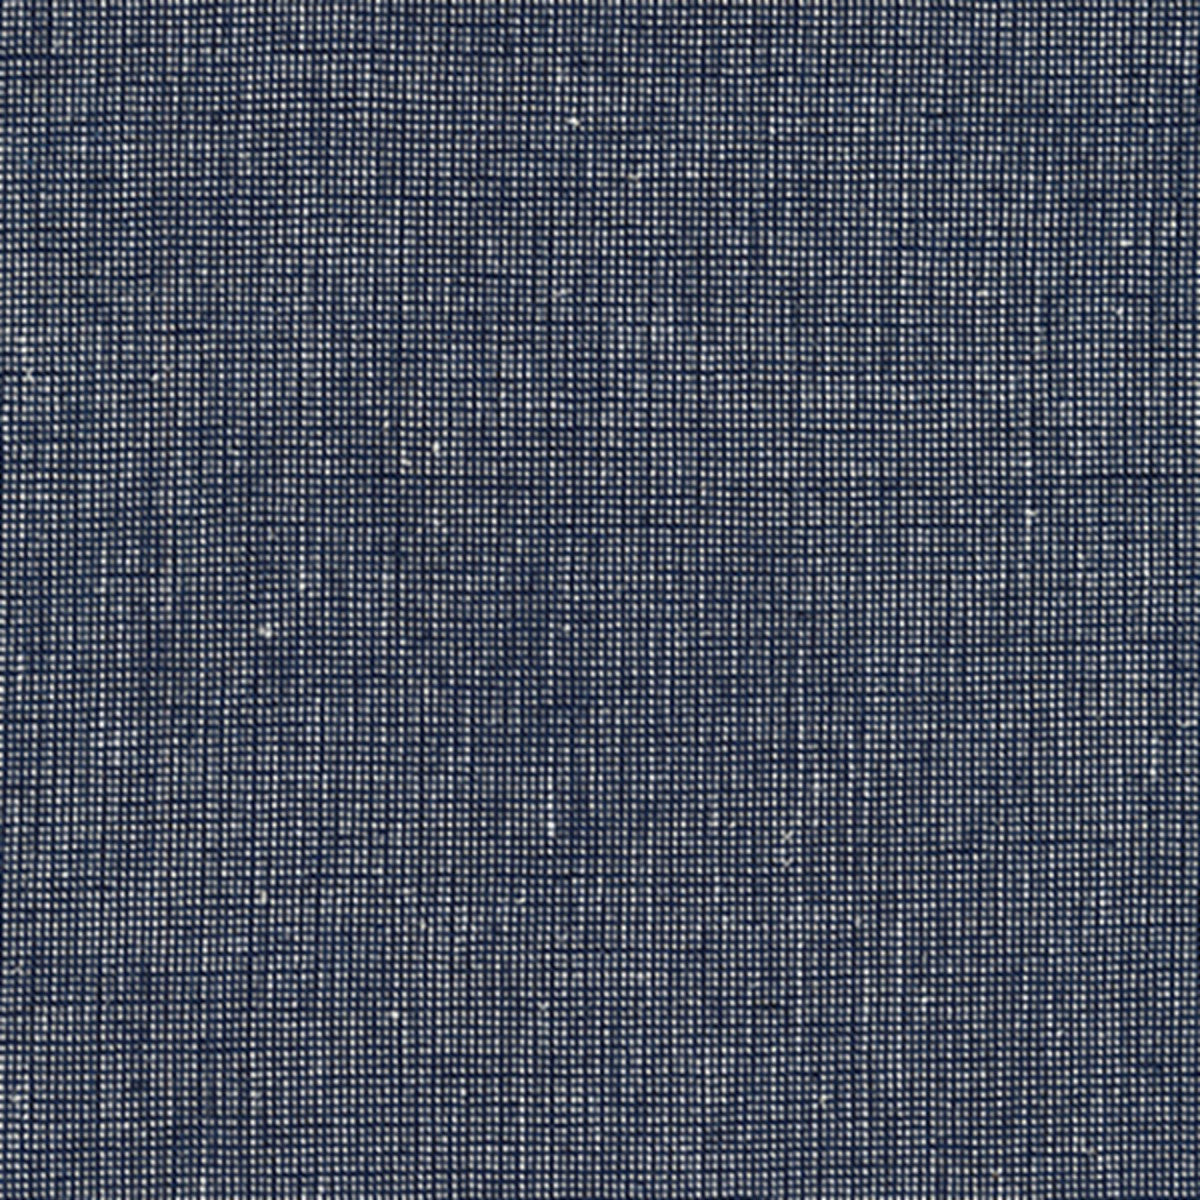 Essex Yarn Dyed - Navy Homespun - 55/45 Linen/Cotton - homesewn